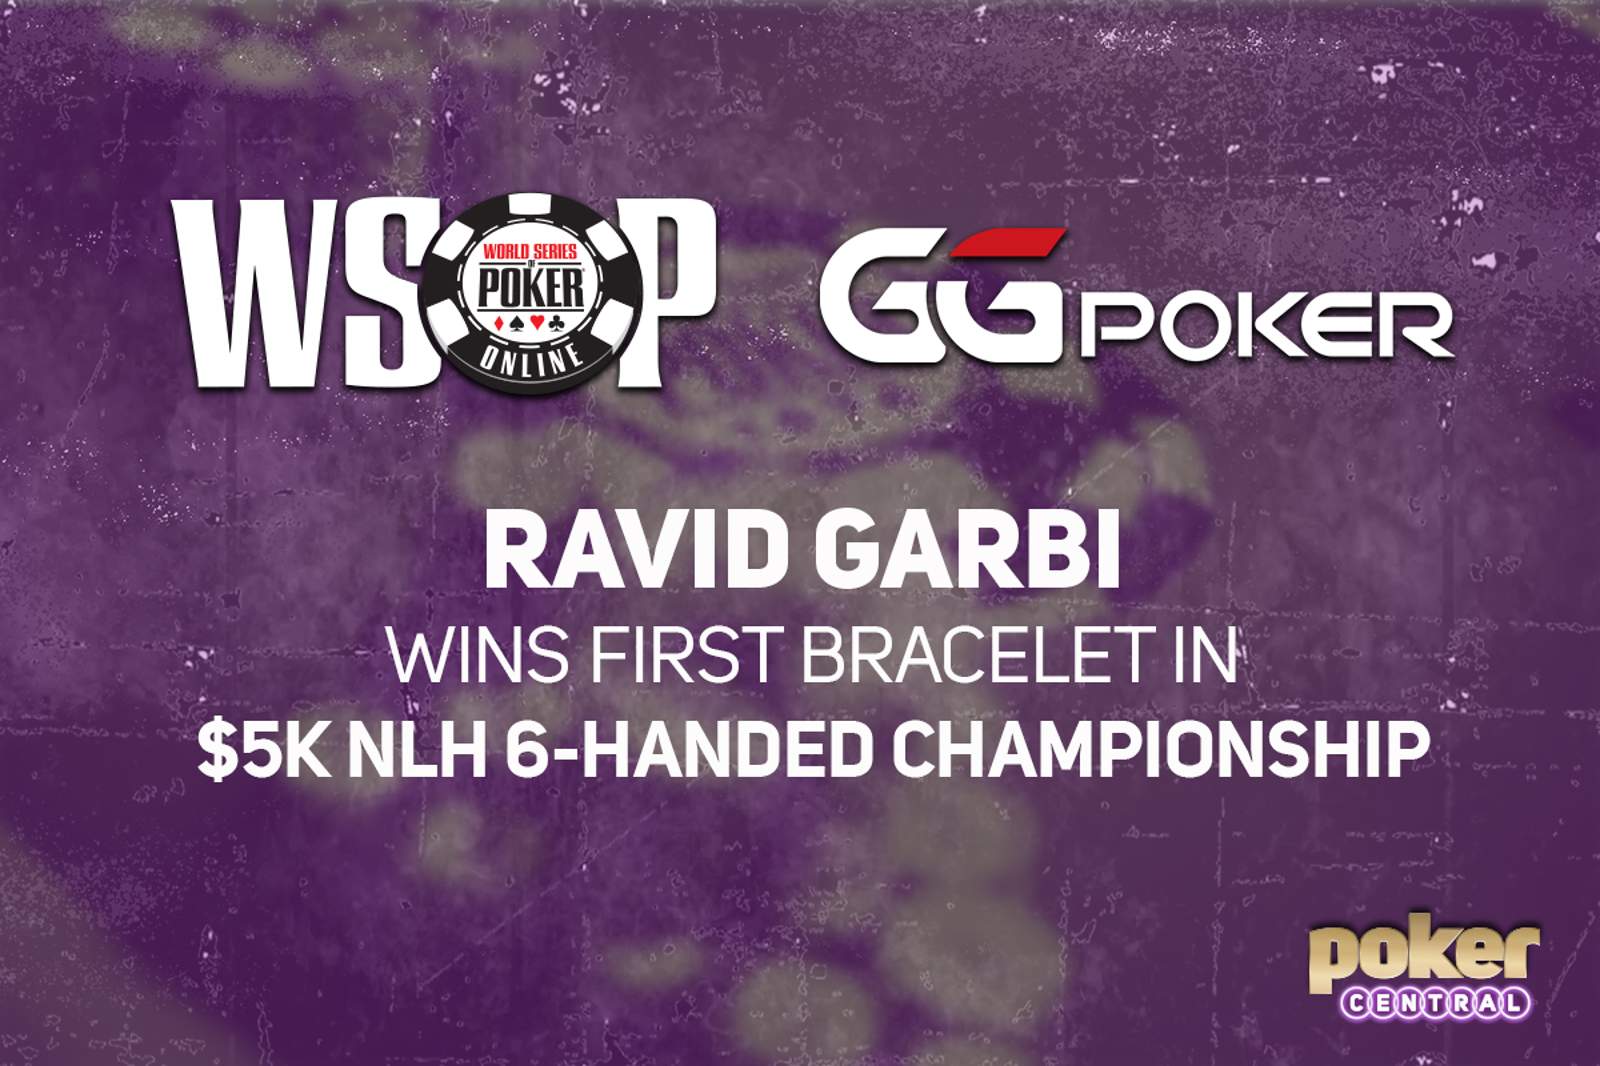 Ravid Garbi Wins First Bracelet in GGPoker WSOP Online $5,000 6-Handed Championship for $531,513